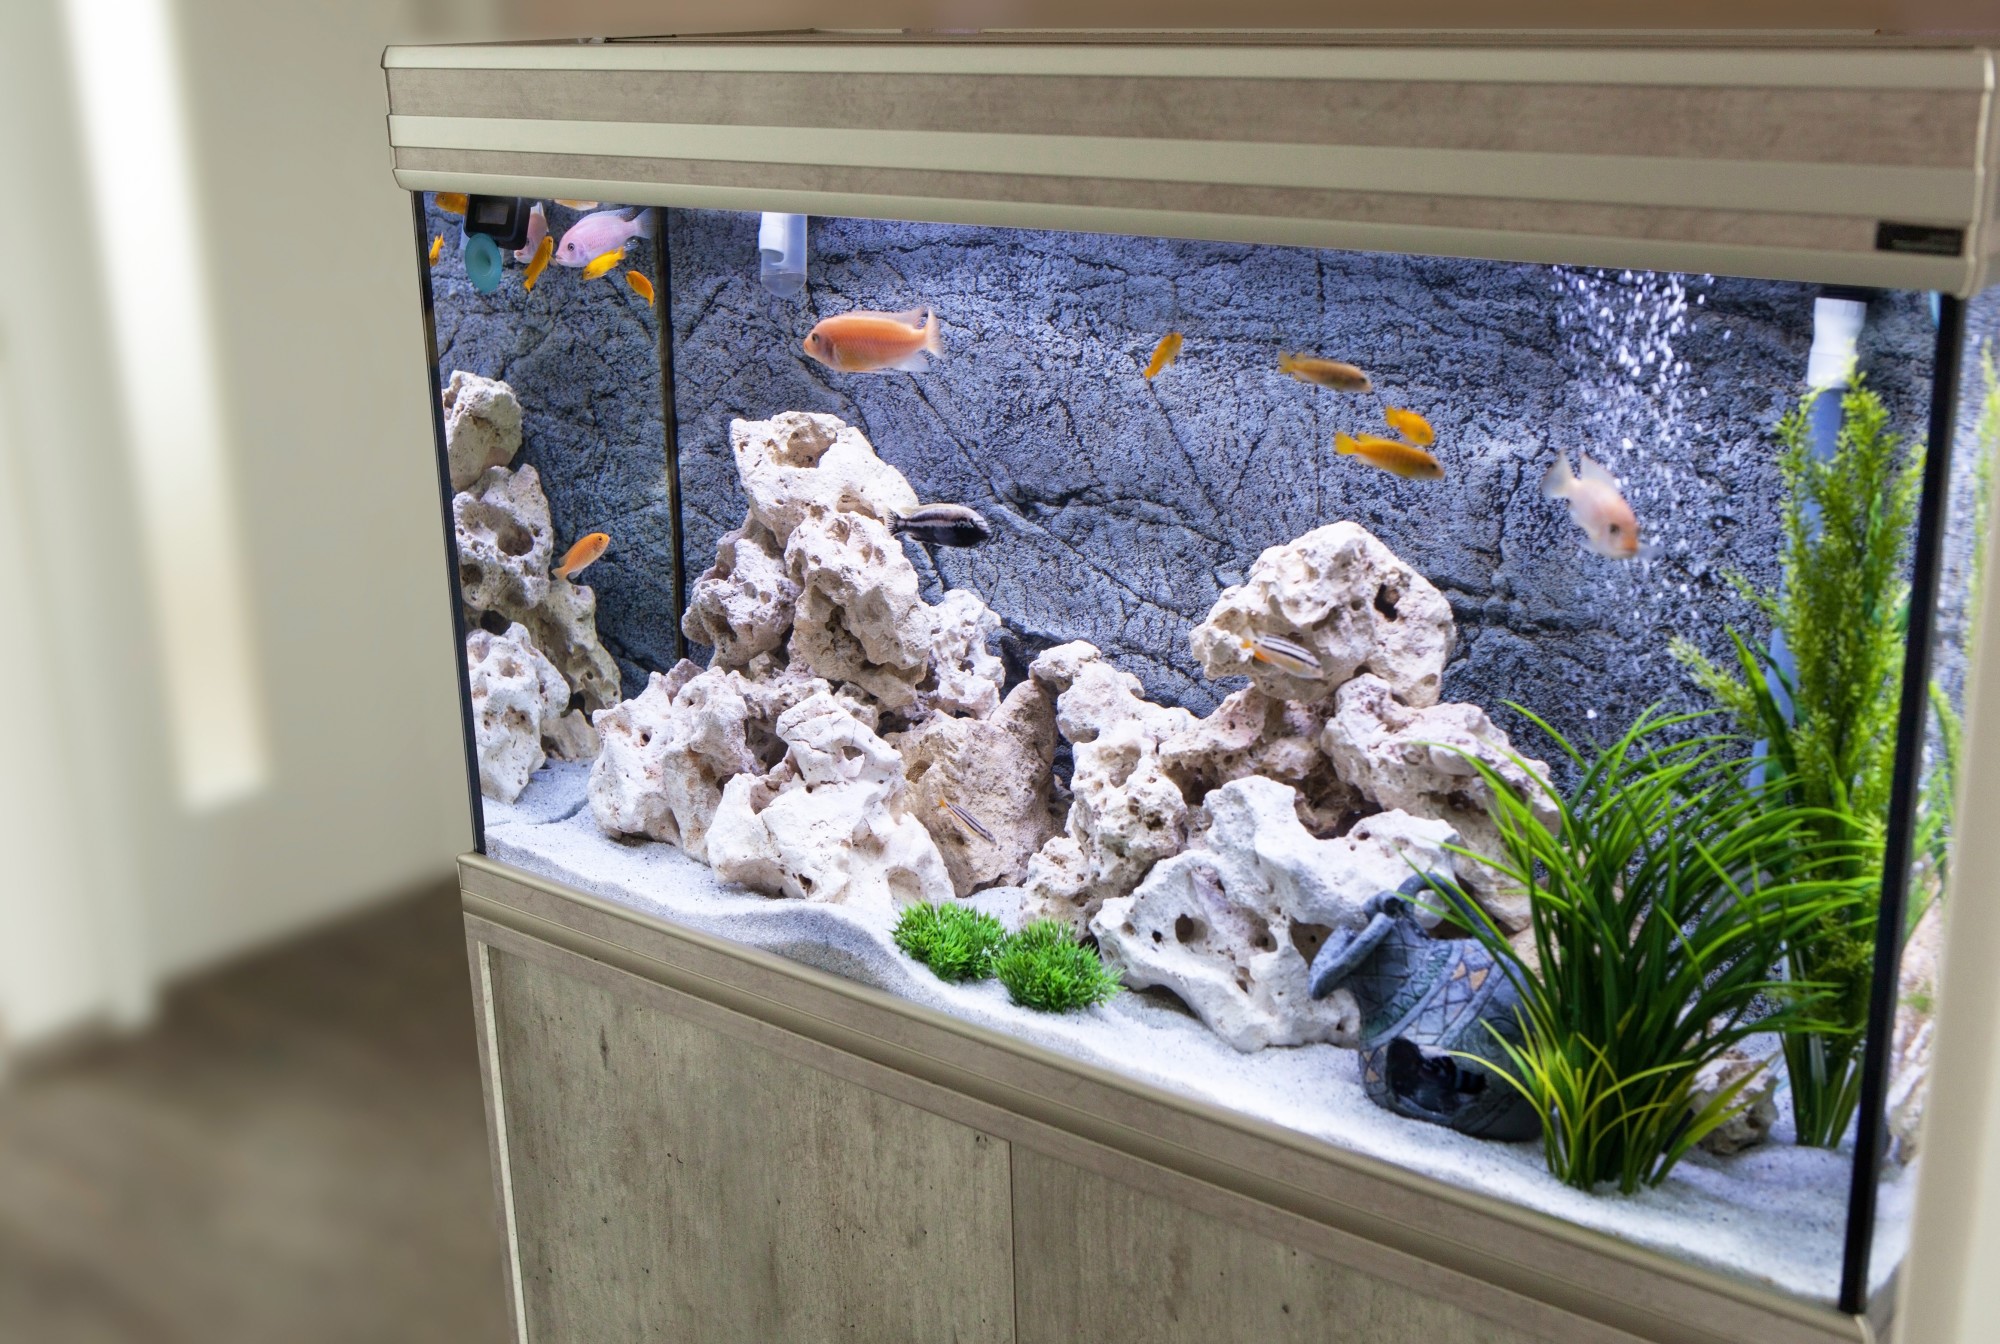 Aquarium with cichlids fish from Lake Malawi